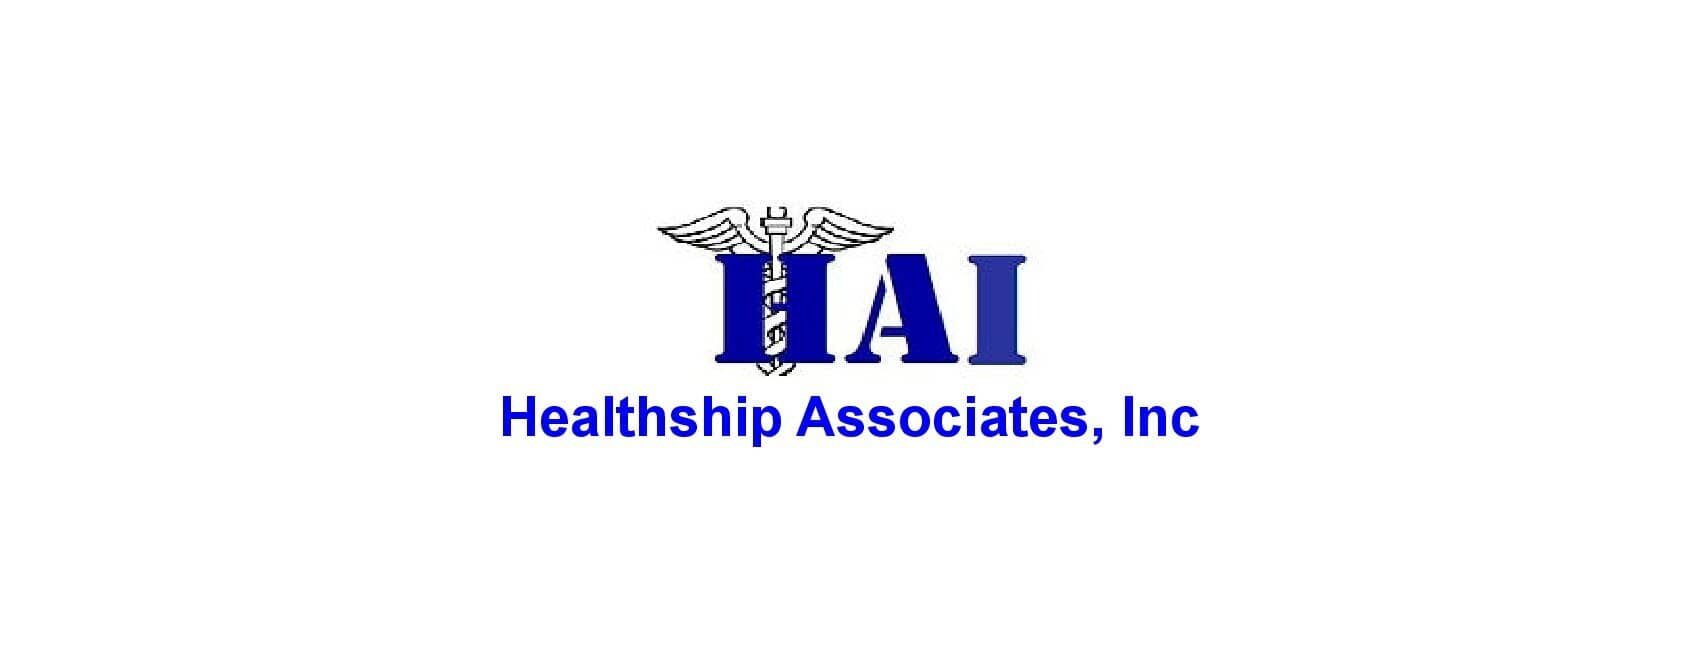 Healthship Associates, Inc. Image